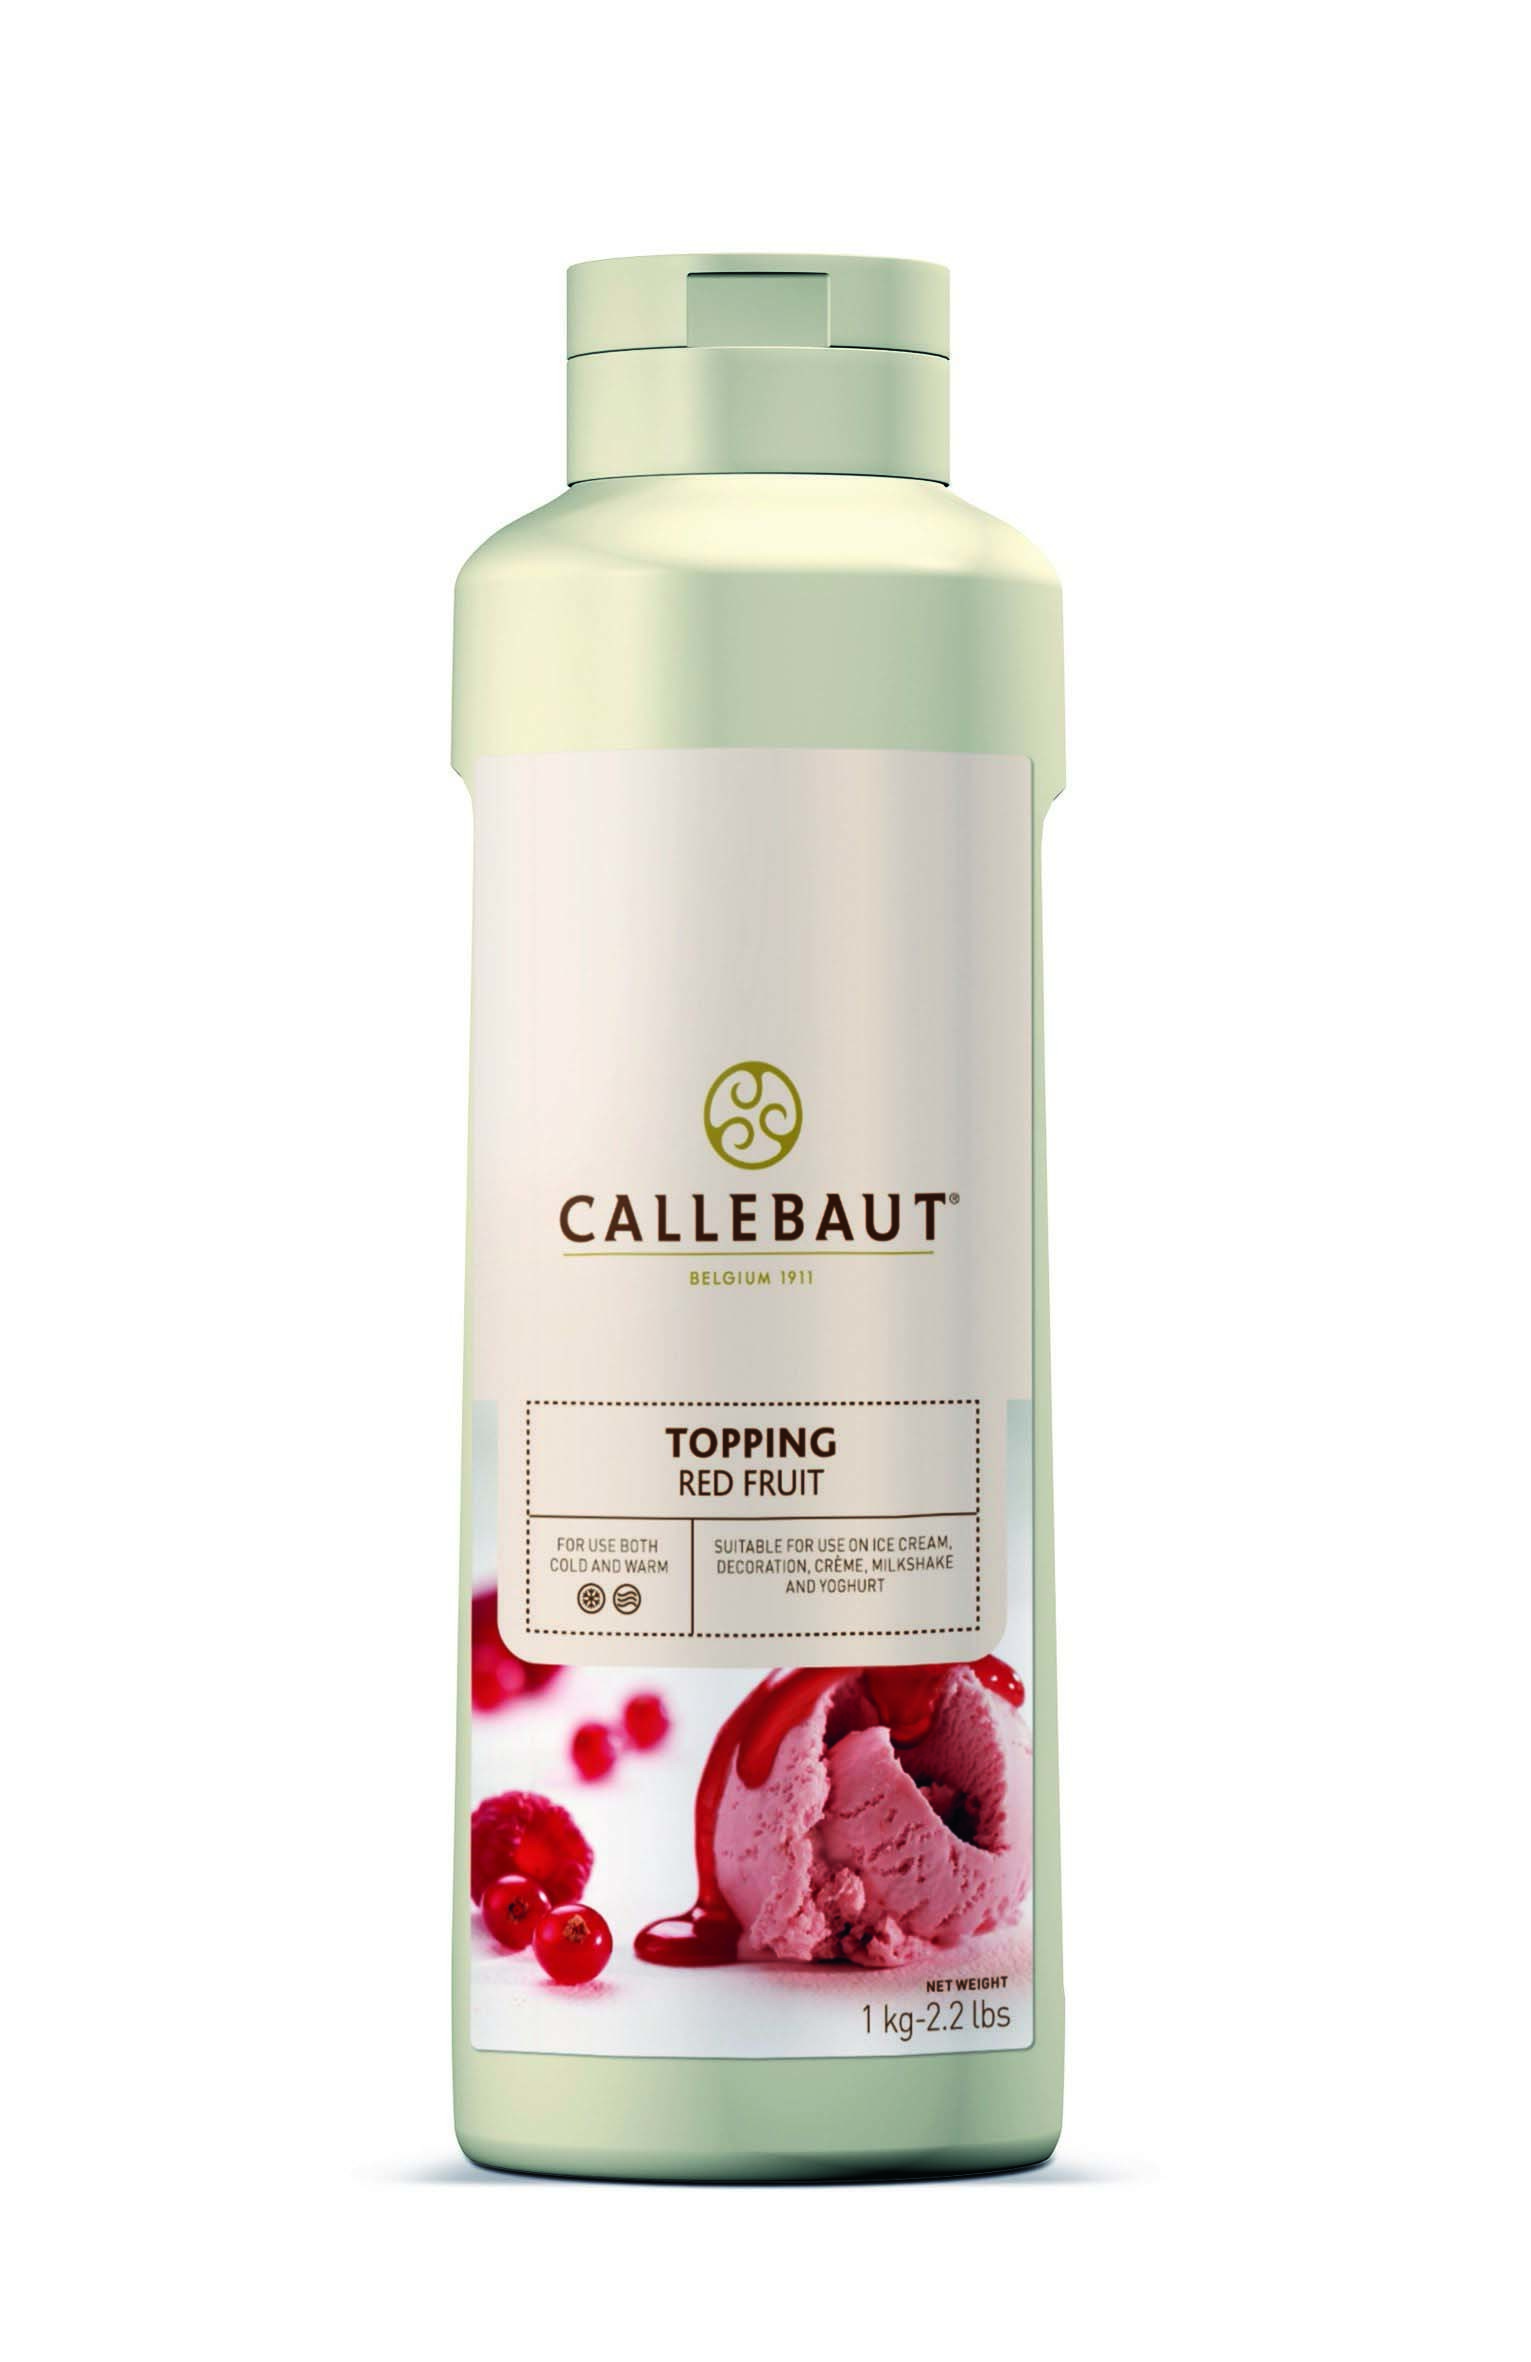 Topping rode vruchten 1L Callebaut knijpfles 